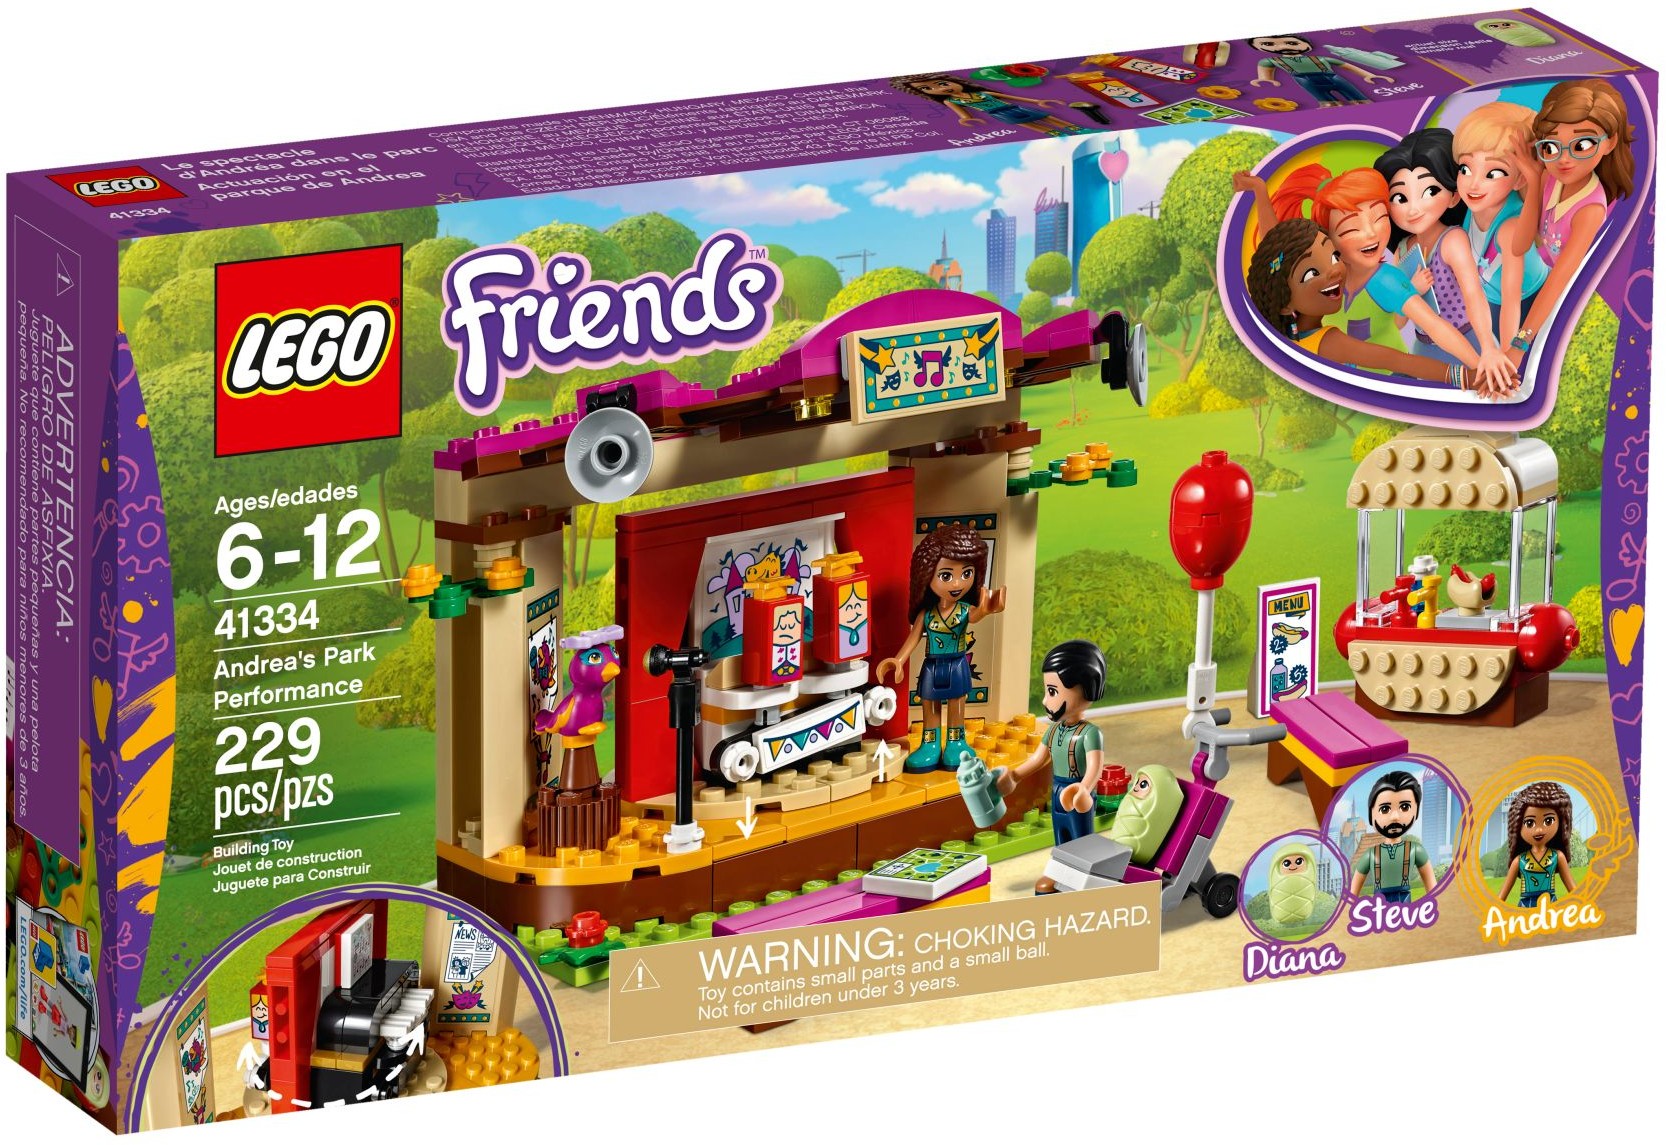 2018 lego friends sets